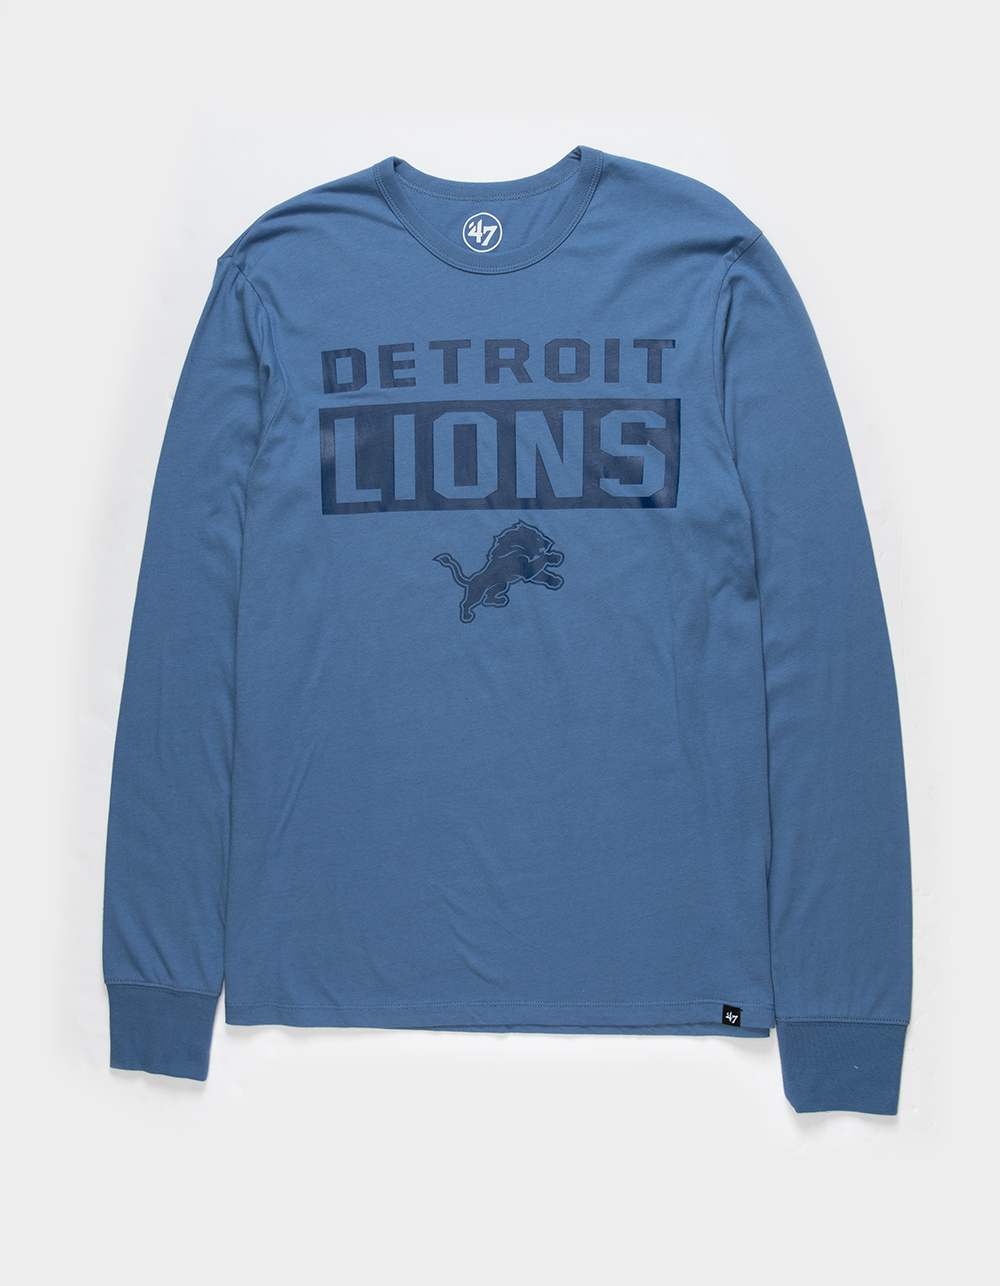 47 Brand Detroit Lions Long Sleeve Tee - Blue - Large